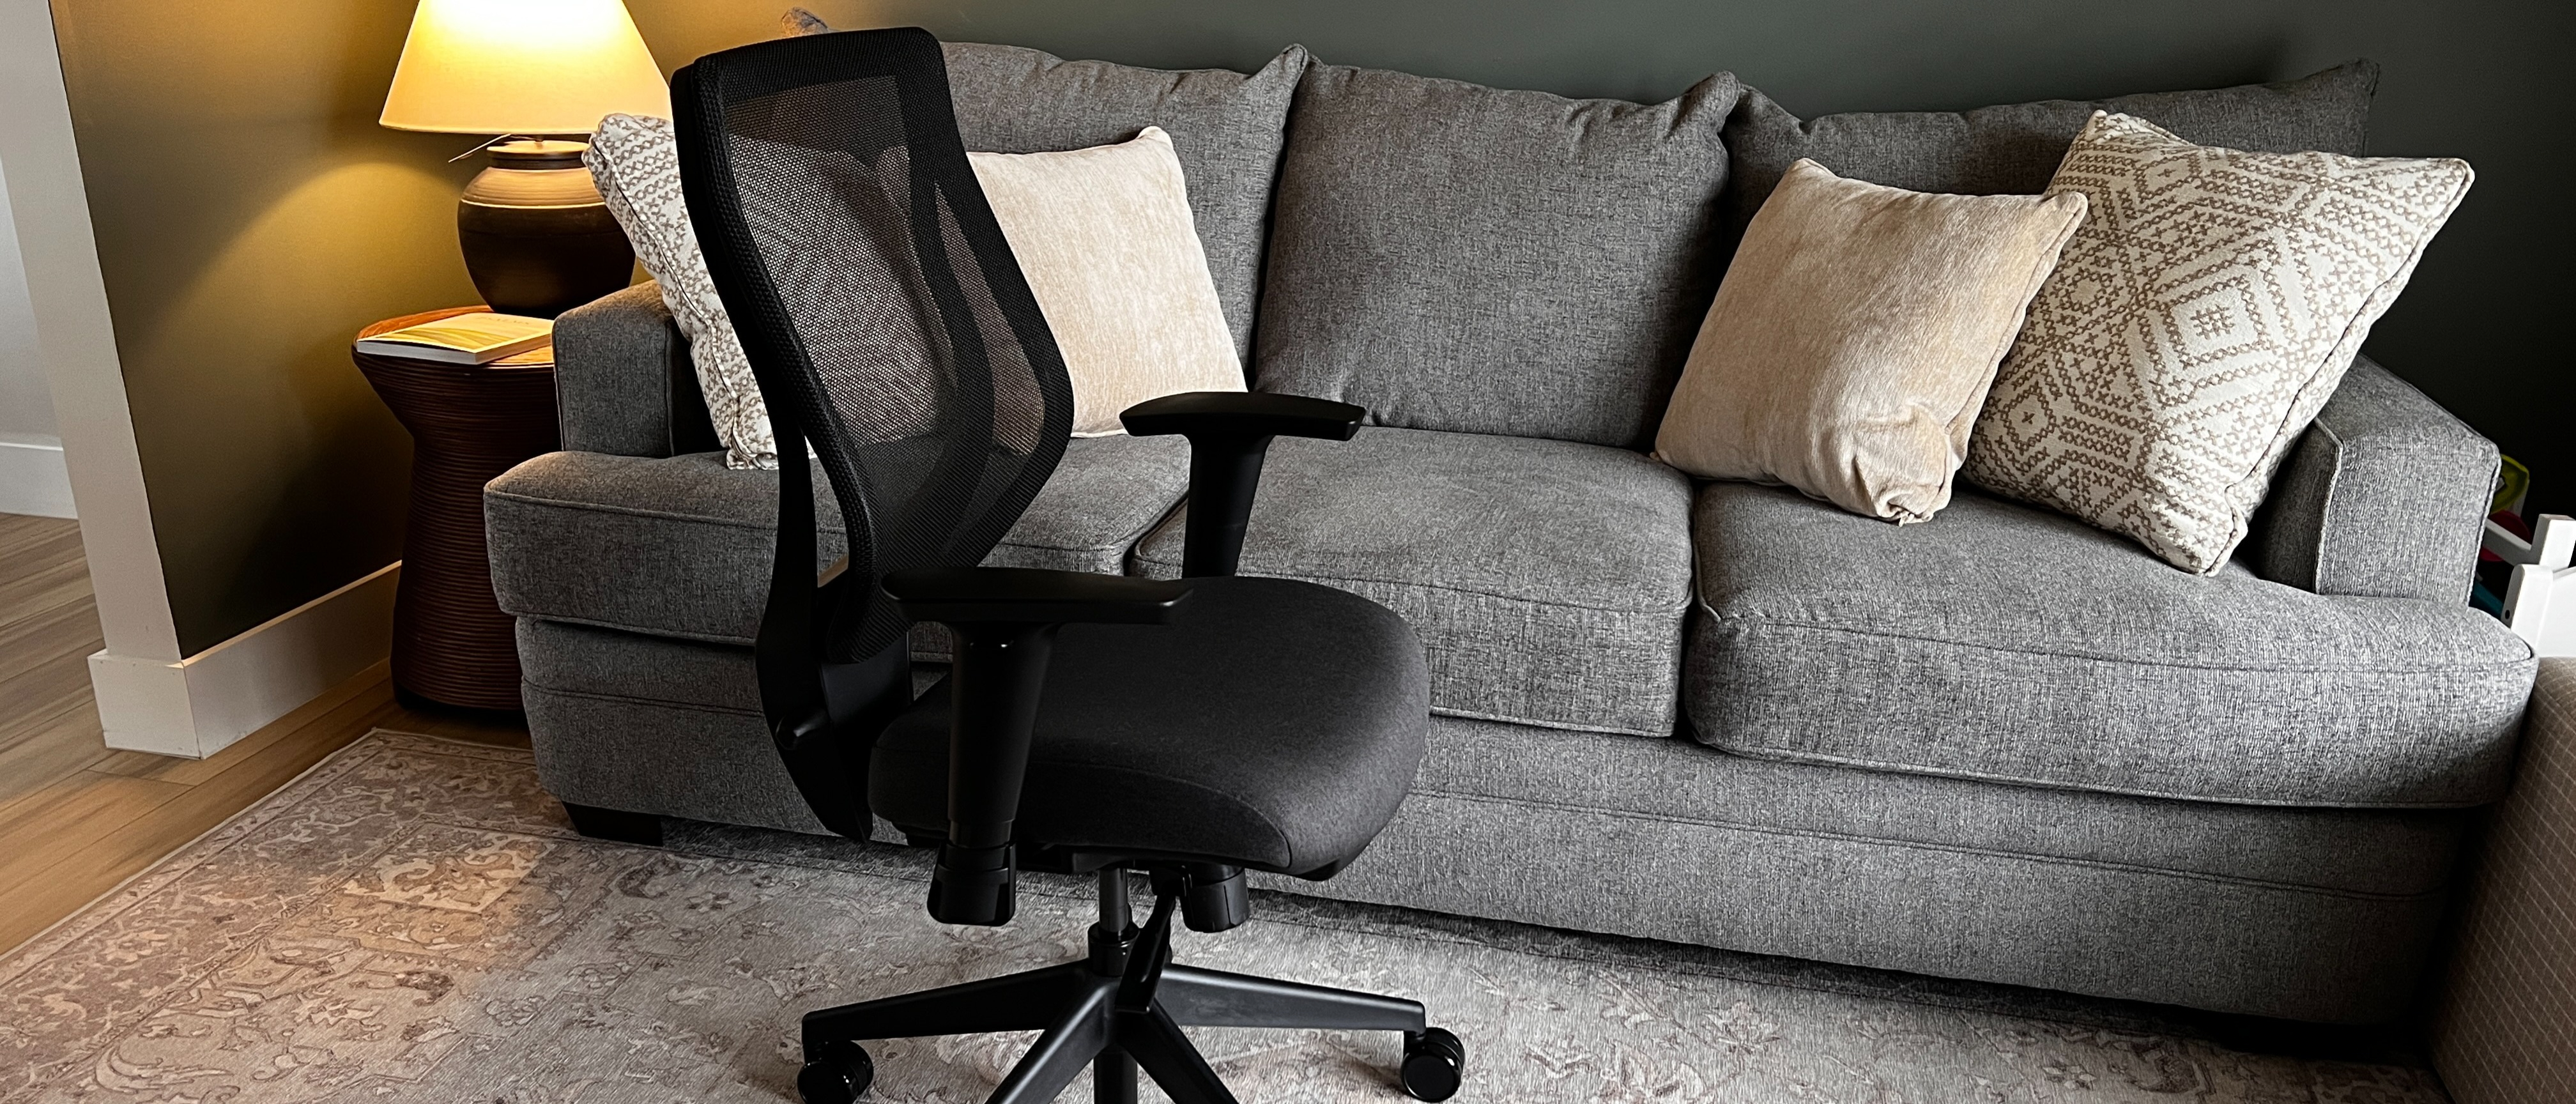 Home Office Ergonomic Chair - YouToo Chair | Ergonofis